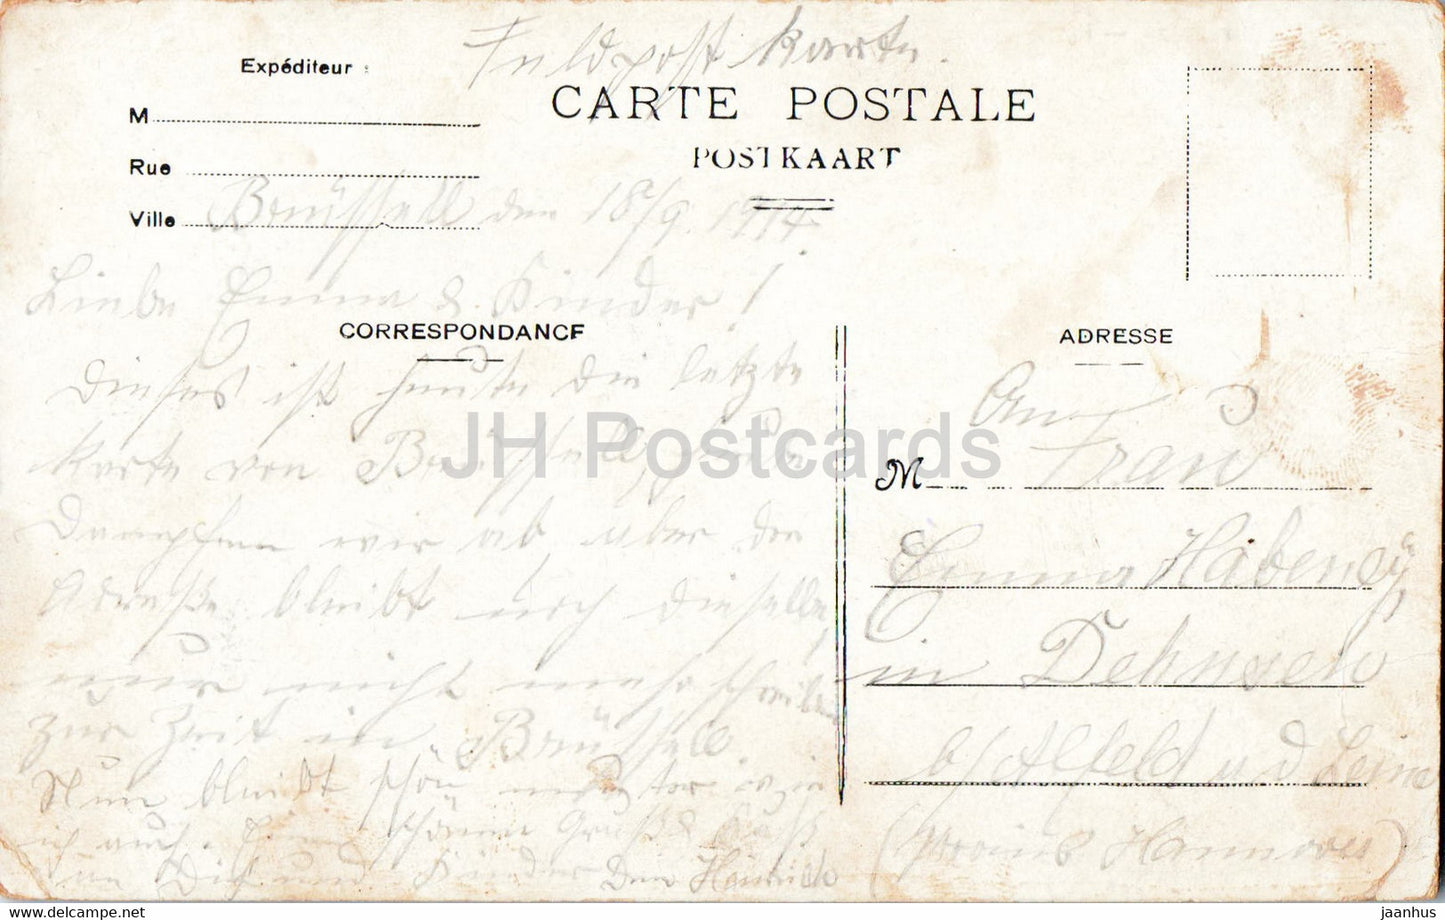 Brüssel - Brüssel - Palais de Justice - alte Postkarte - 1917 - Belgien - gebraucht